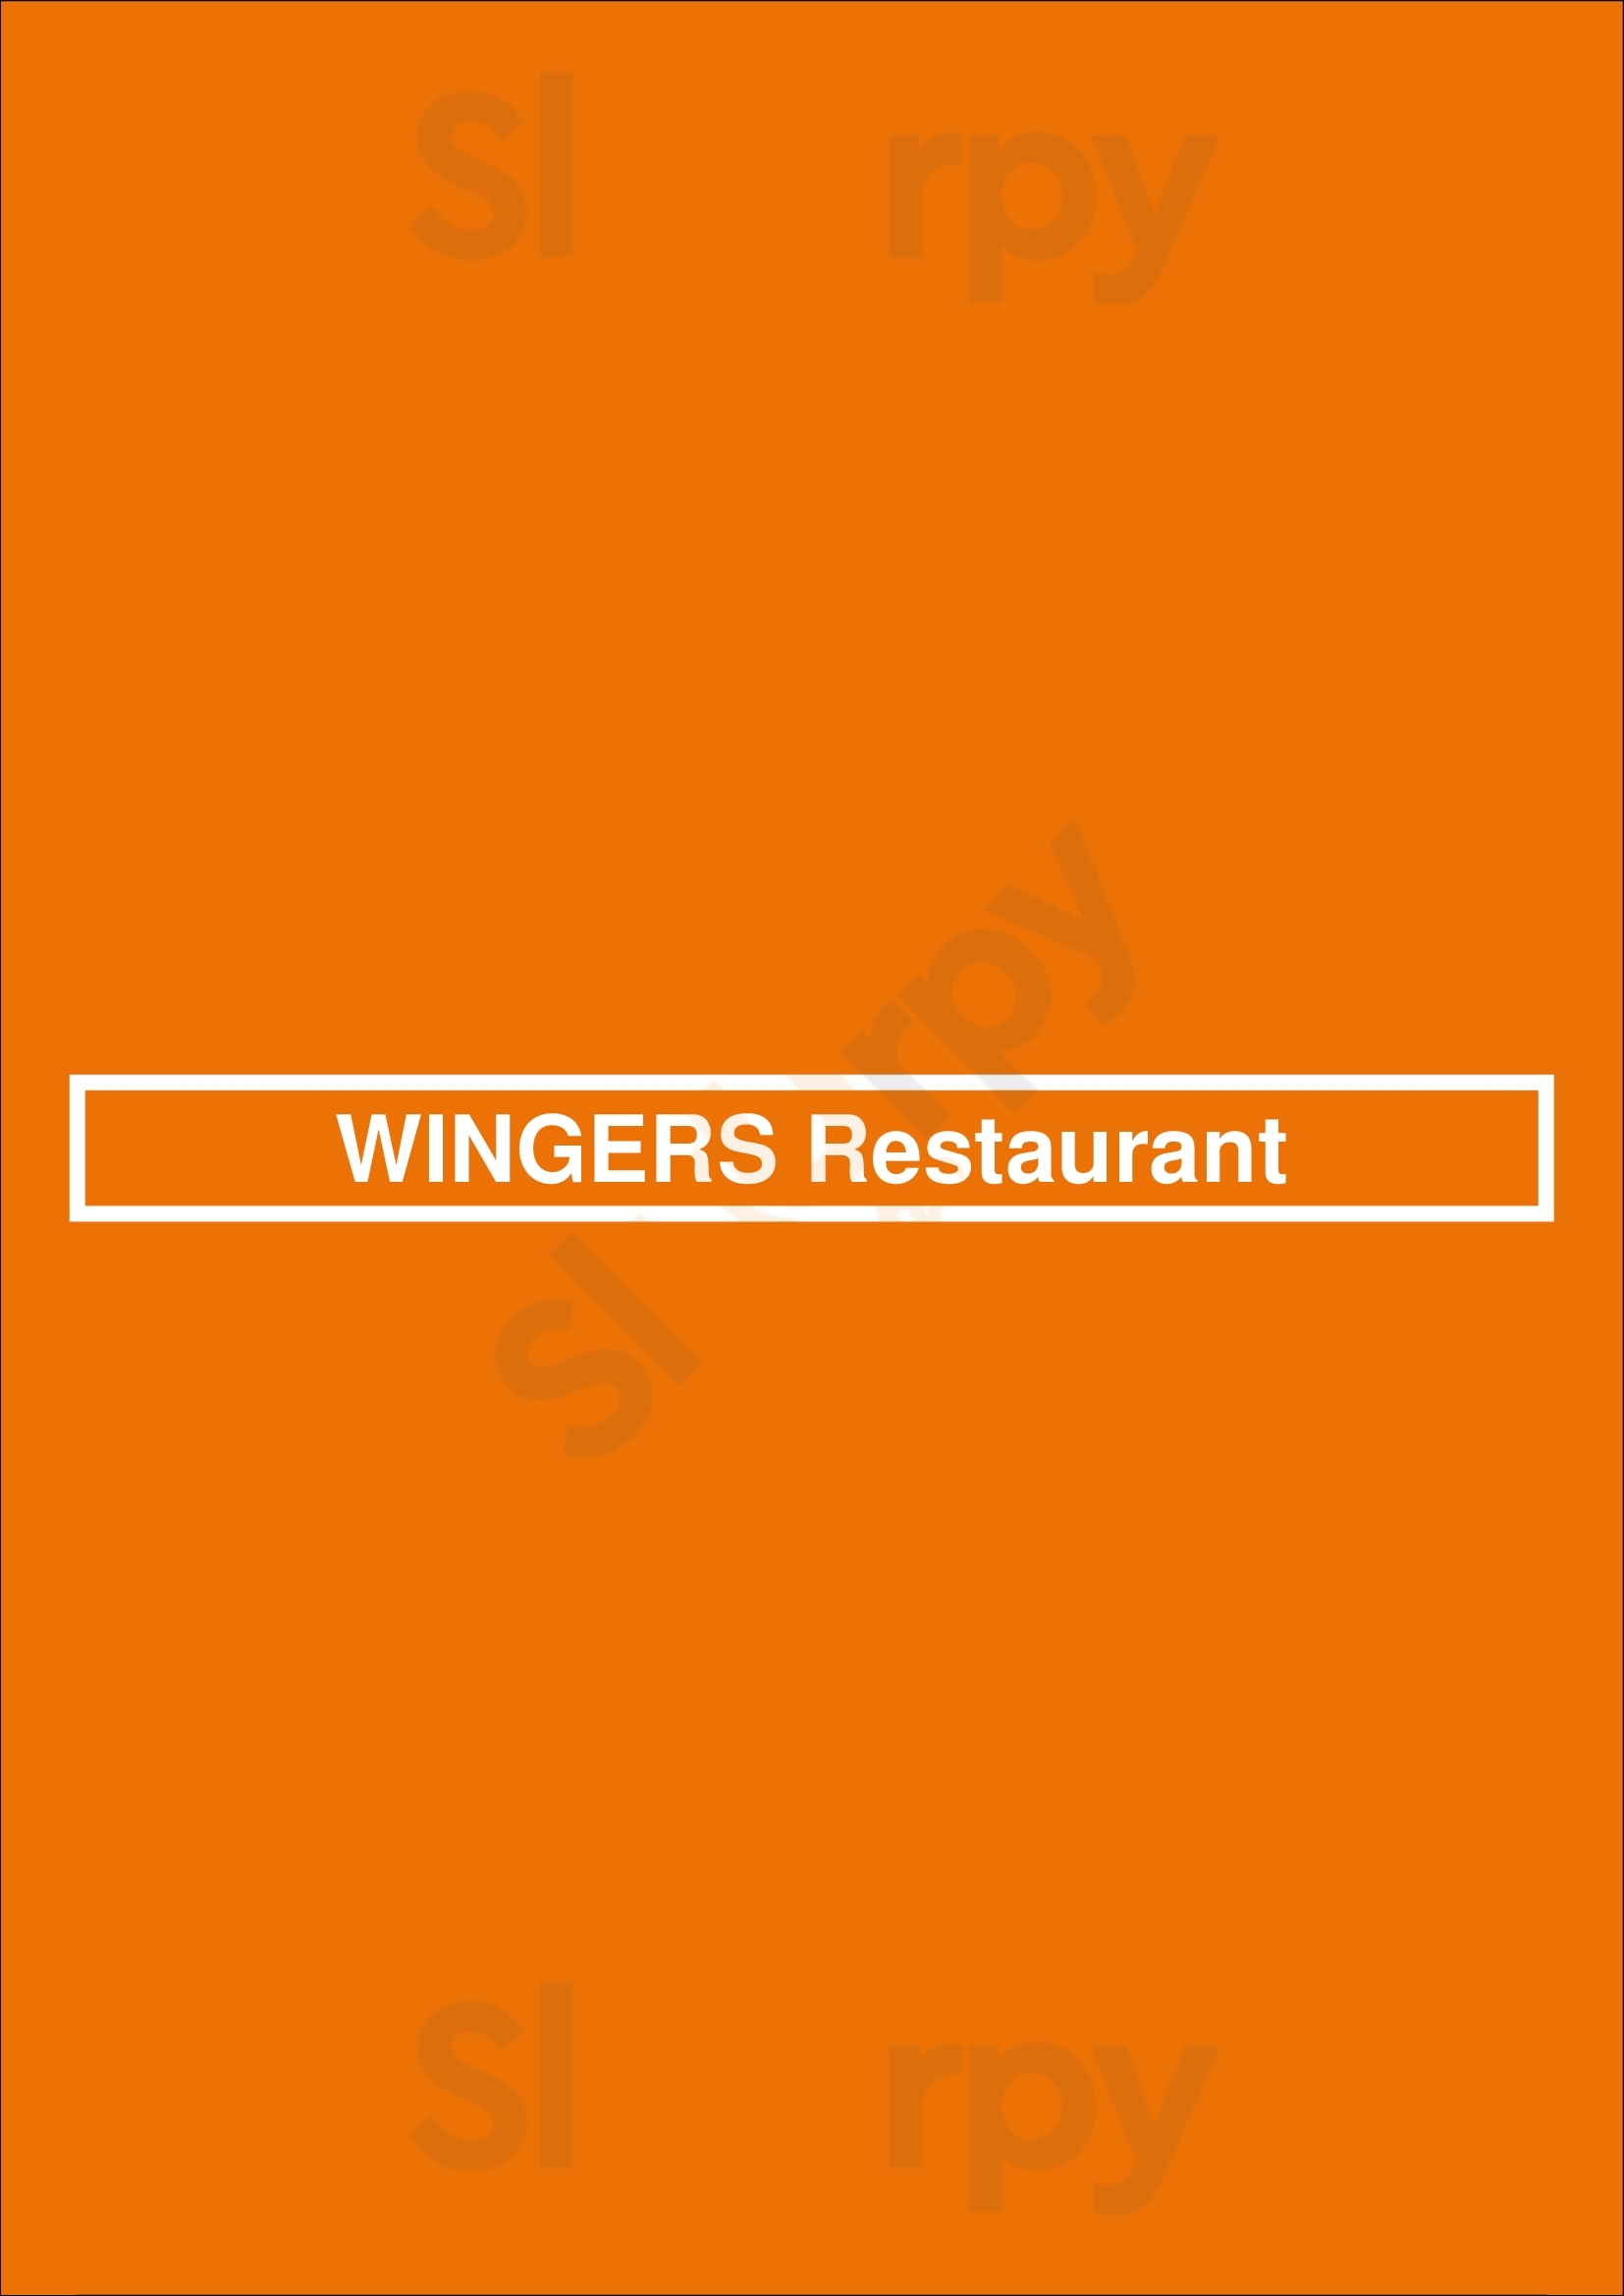 Wingers Restaurant Orem Menu - 1